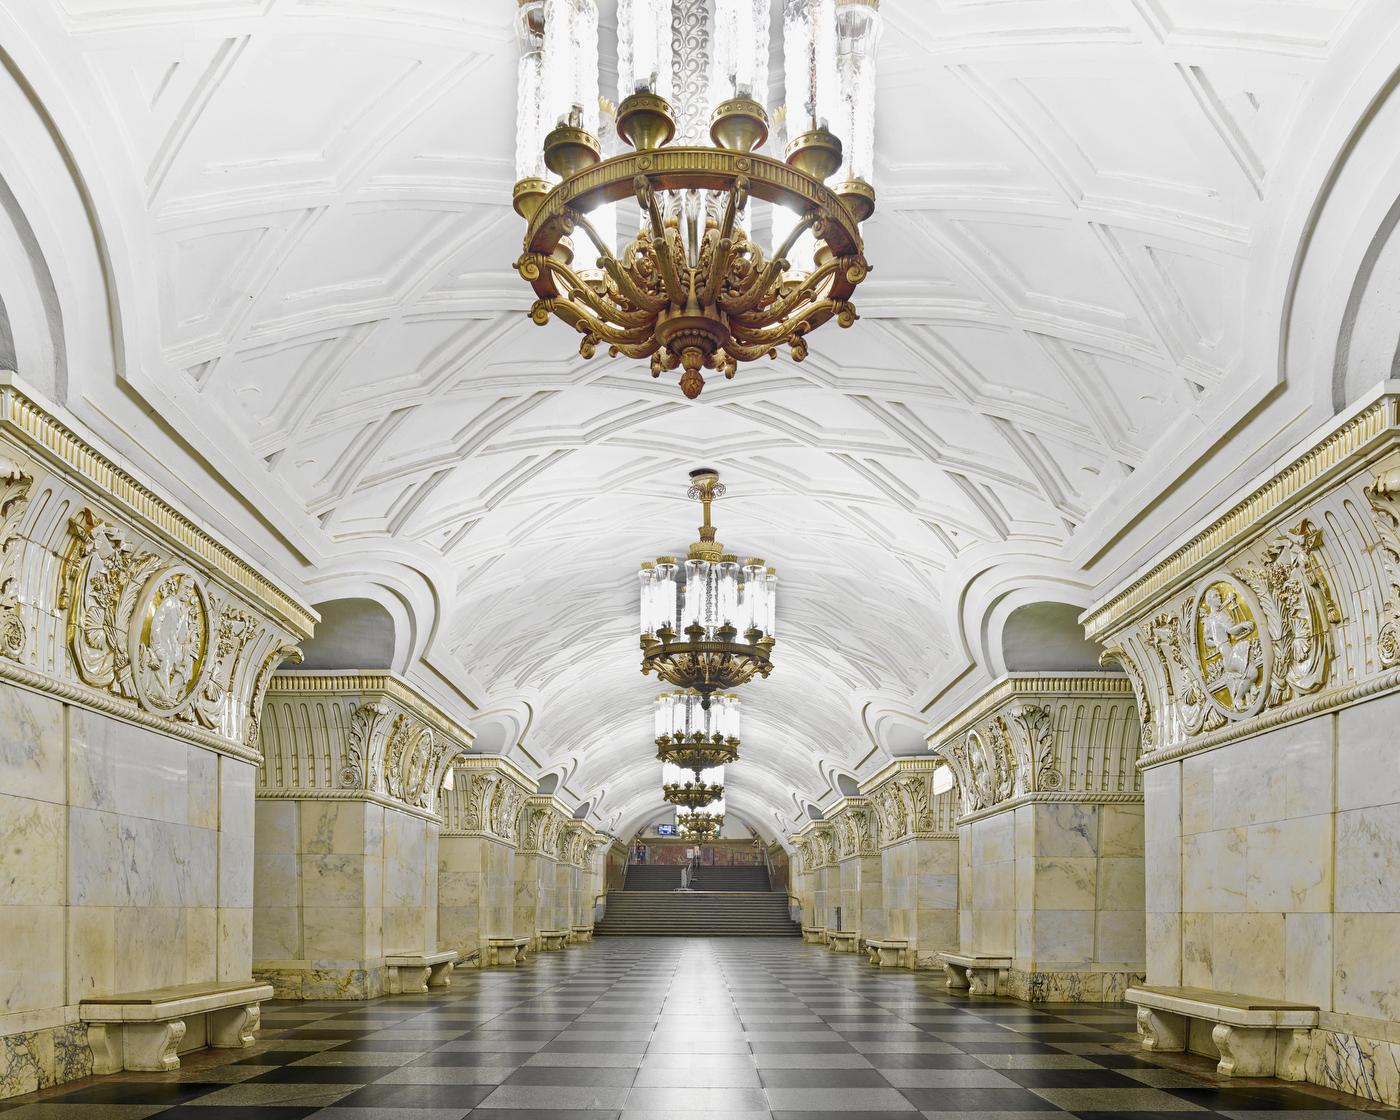 David Burdeny Color Photograph - Prospekt Mira Station, Moscow, Russia (44” x 55”)